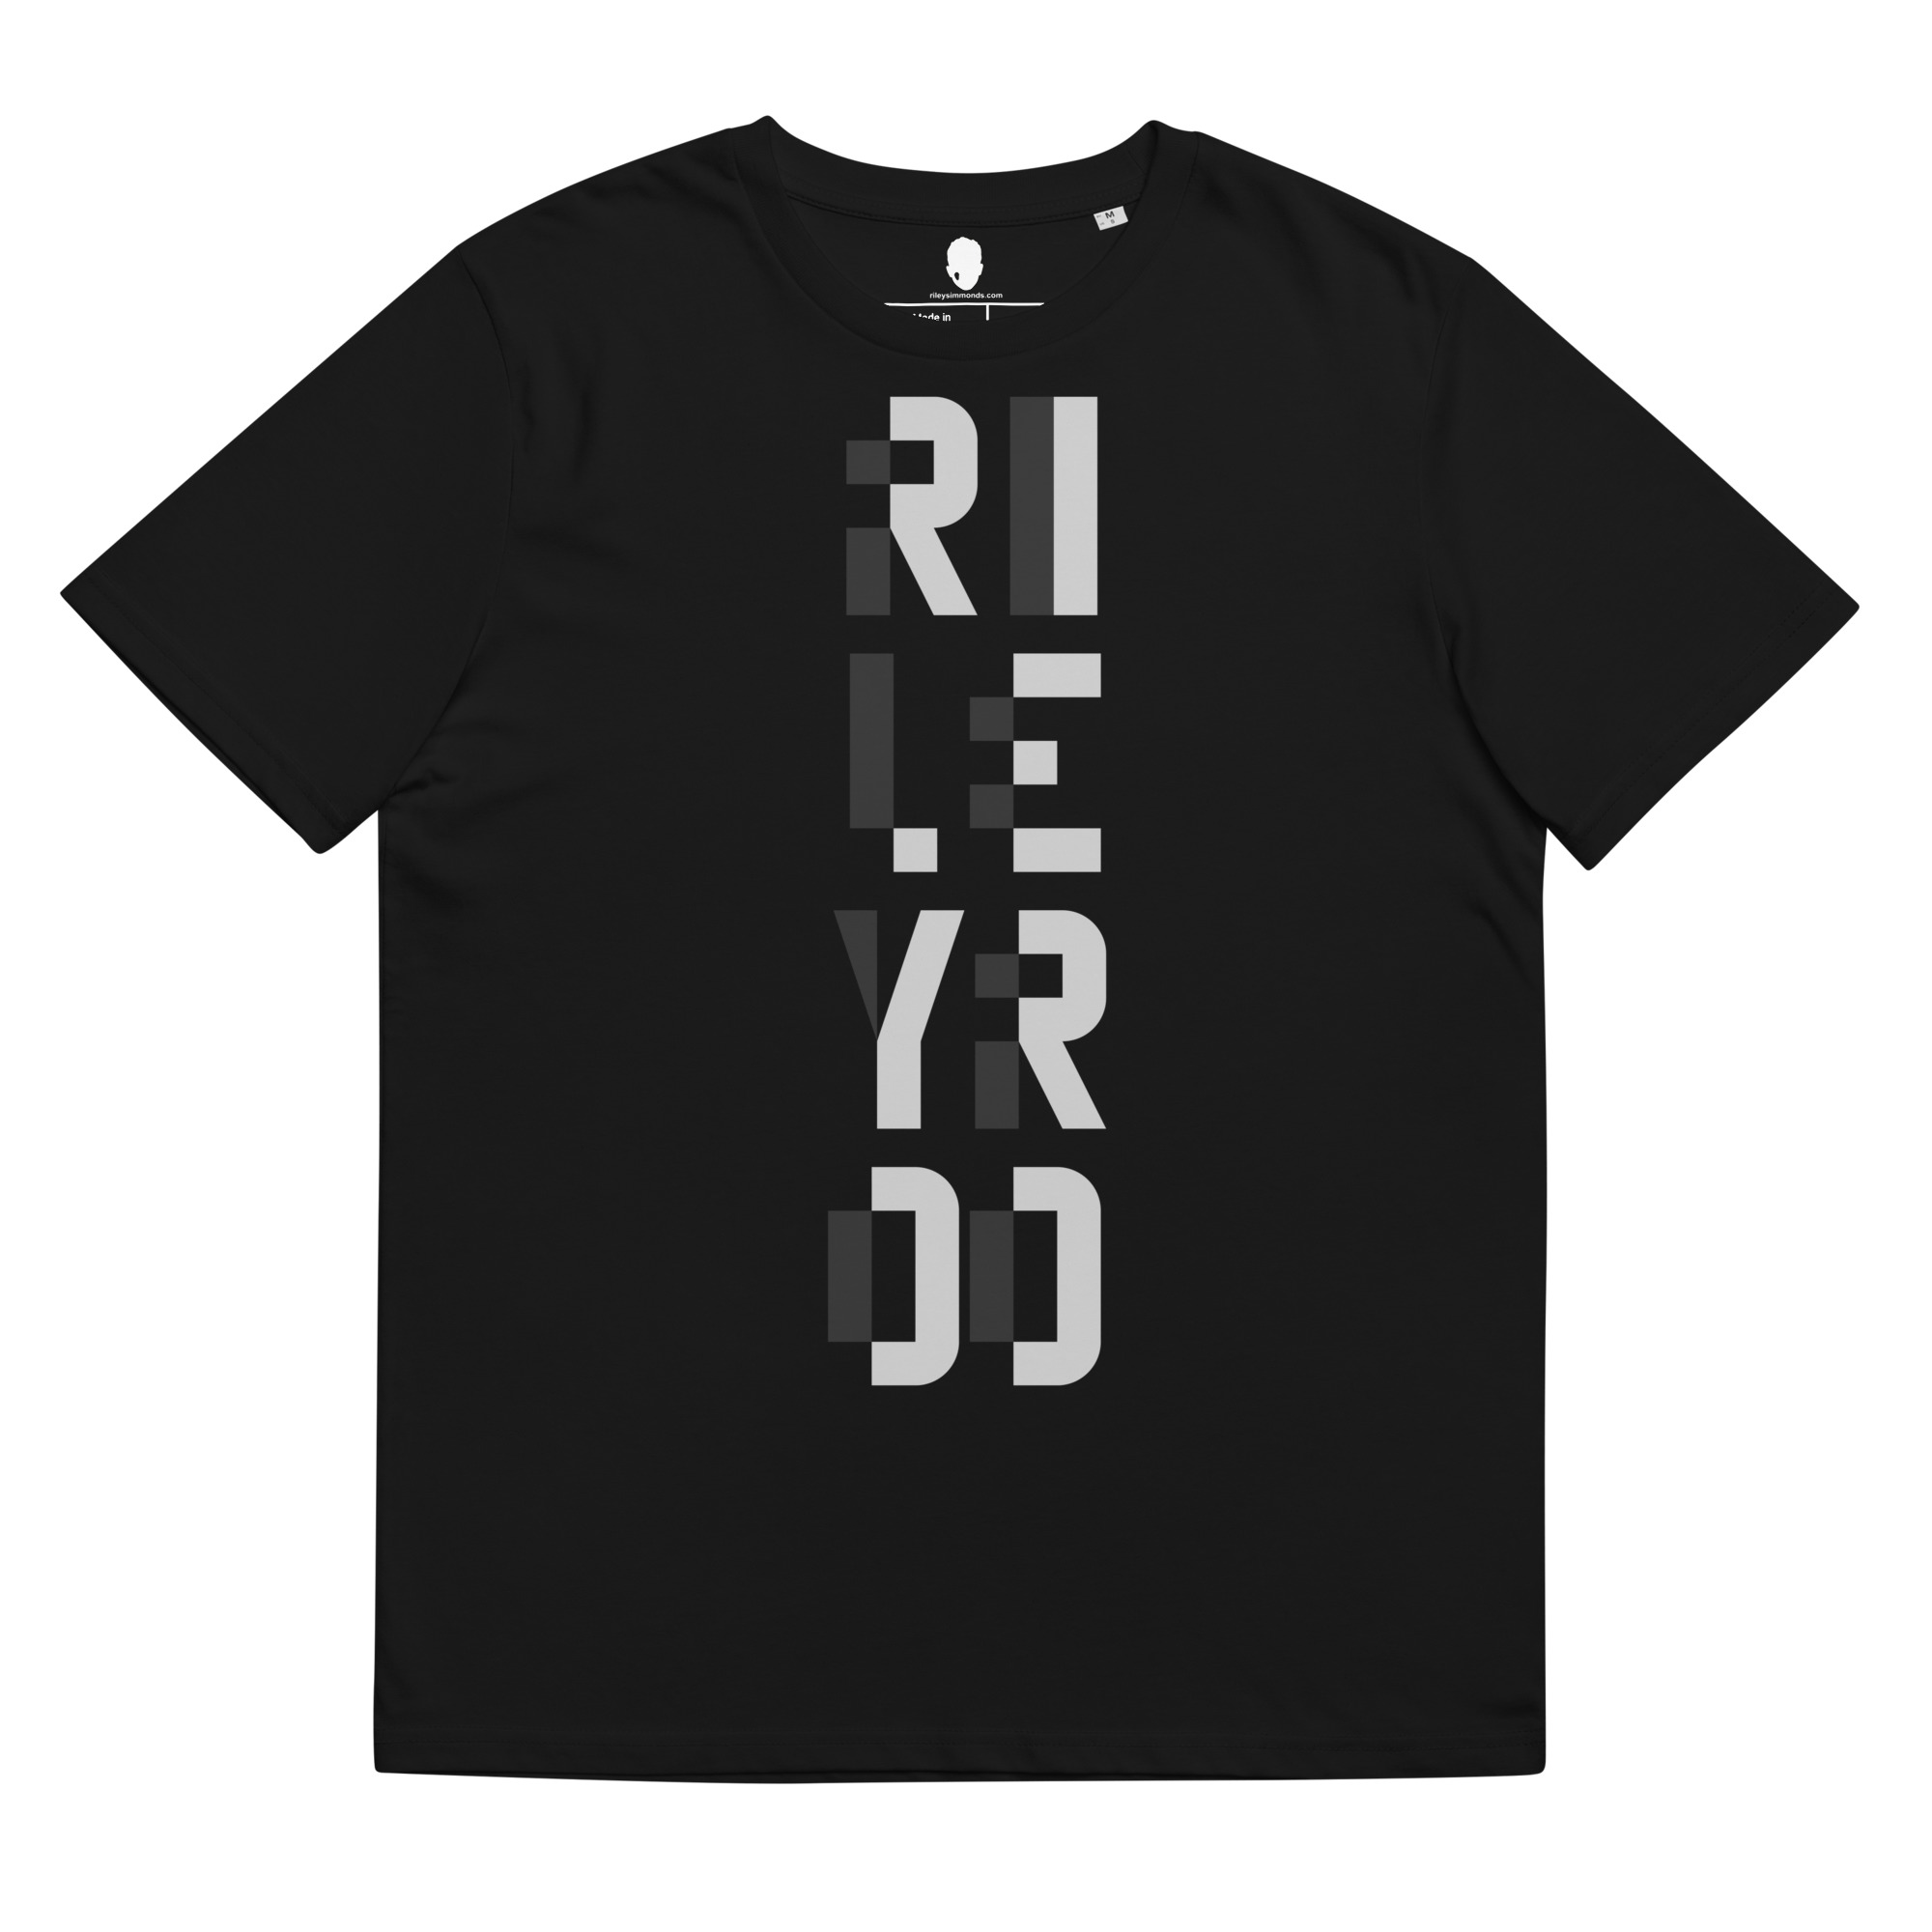 unisex-organic-cotton-t-shirt-black-front-6522965c04133.jpg